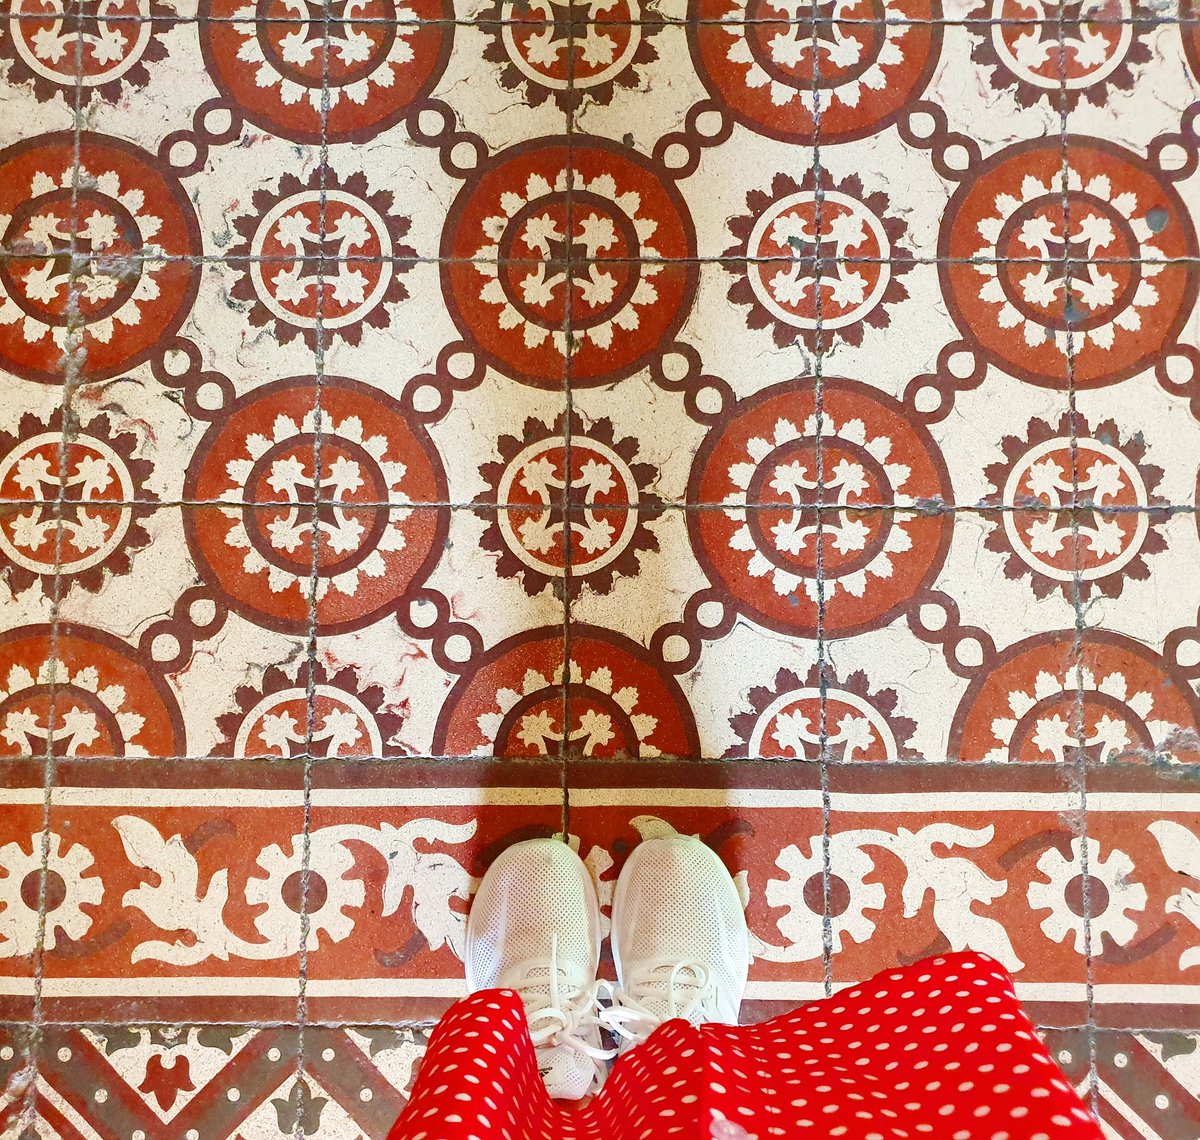 Pattern tiles ❤ #patterntiles #patternedtiles #beautiful #floor #travel #Church #lefkara